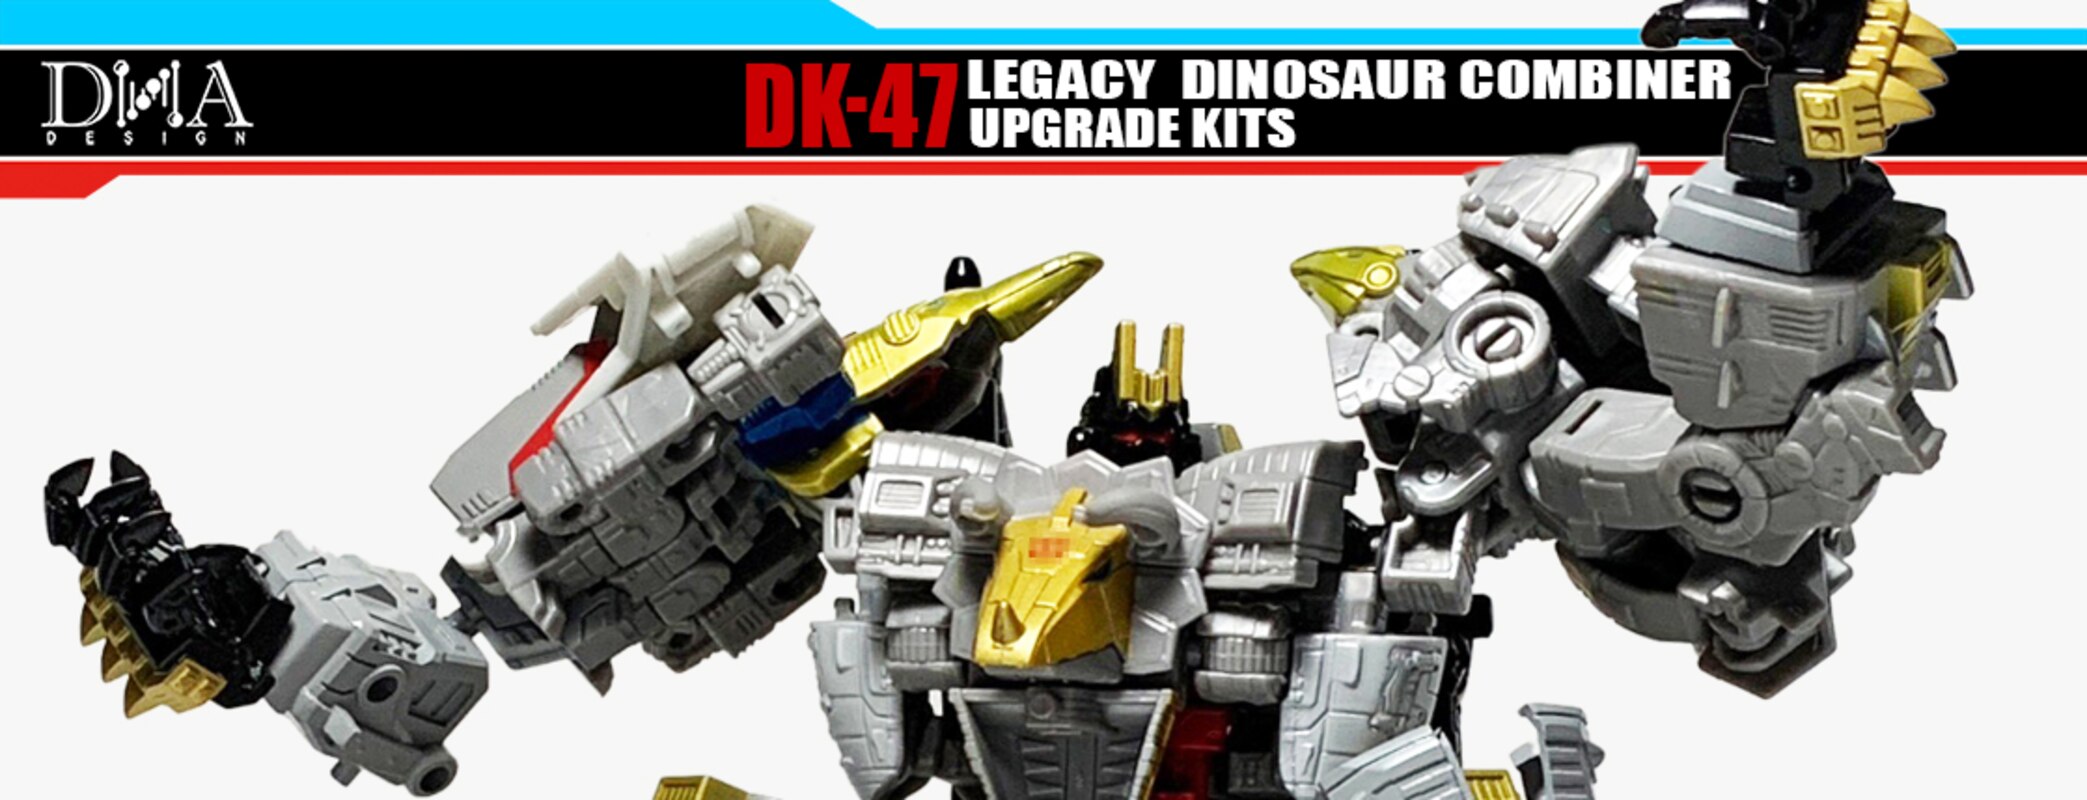 DNA Design DK-47 Volcanicus Upgrade Kit Official Reveal for Legacy Evolution Core Dinobots